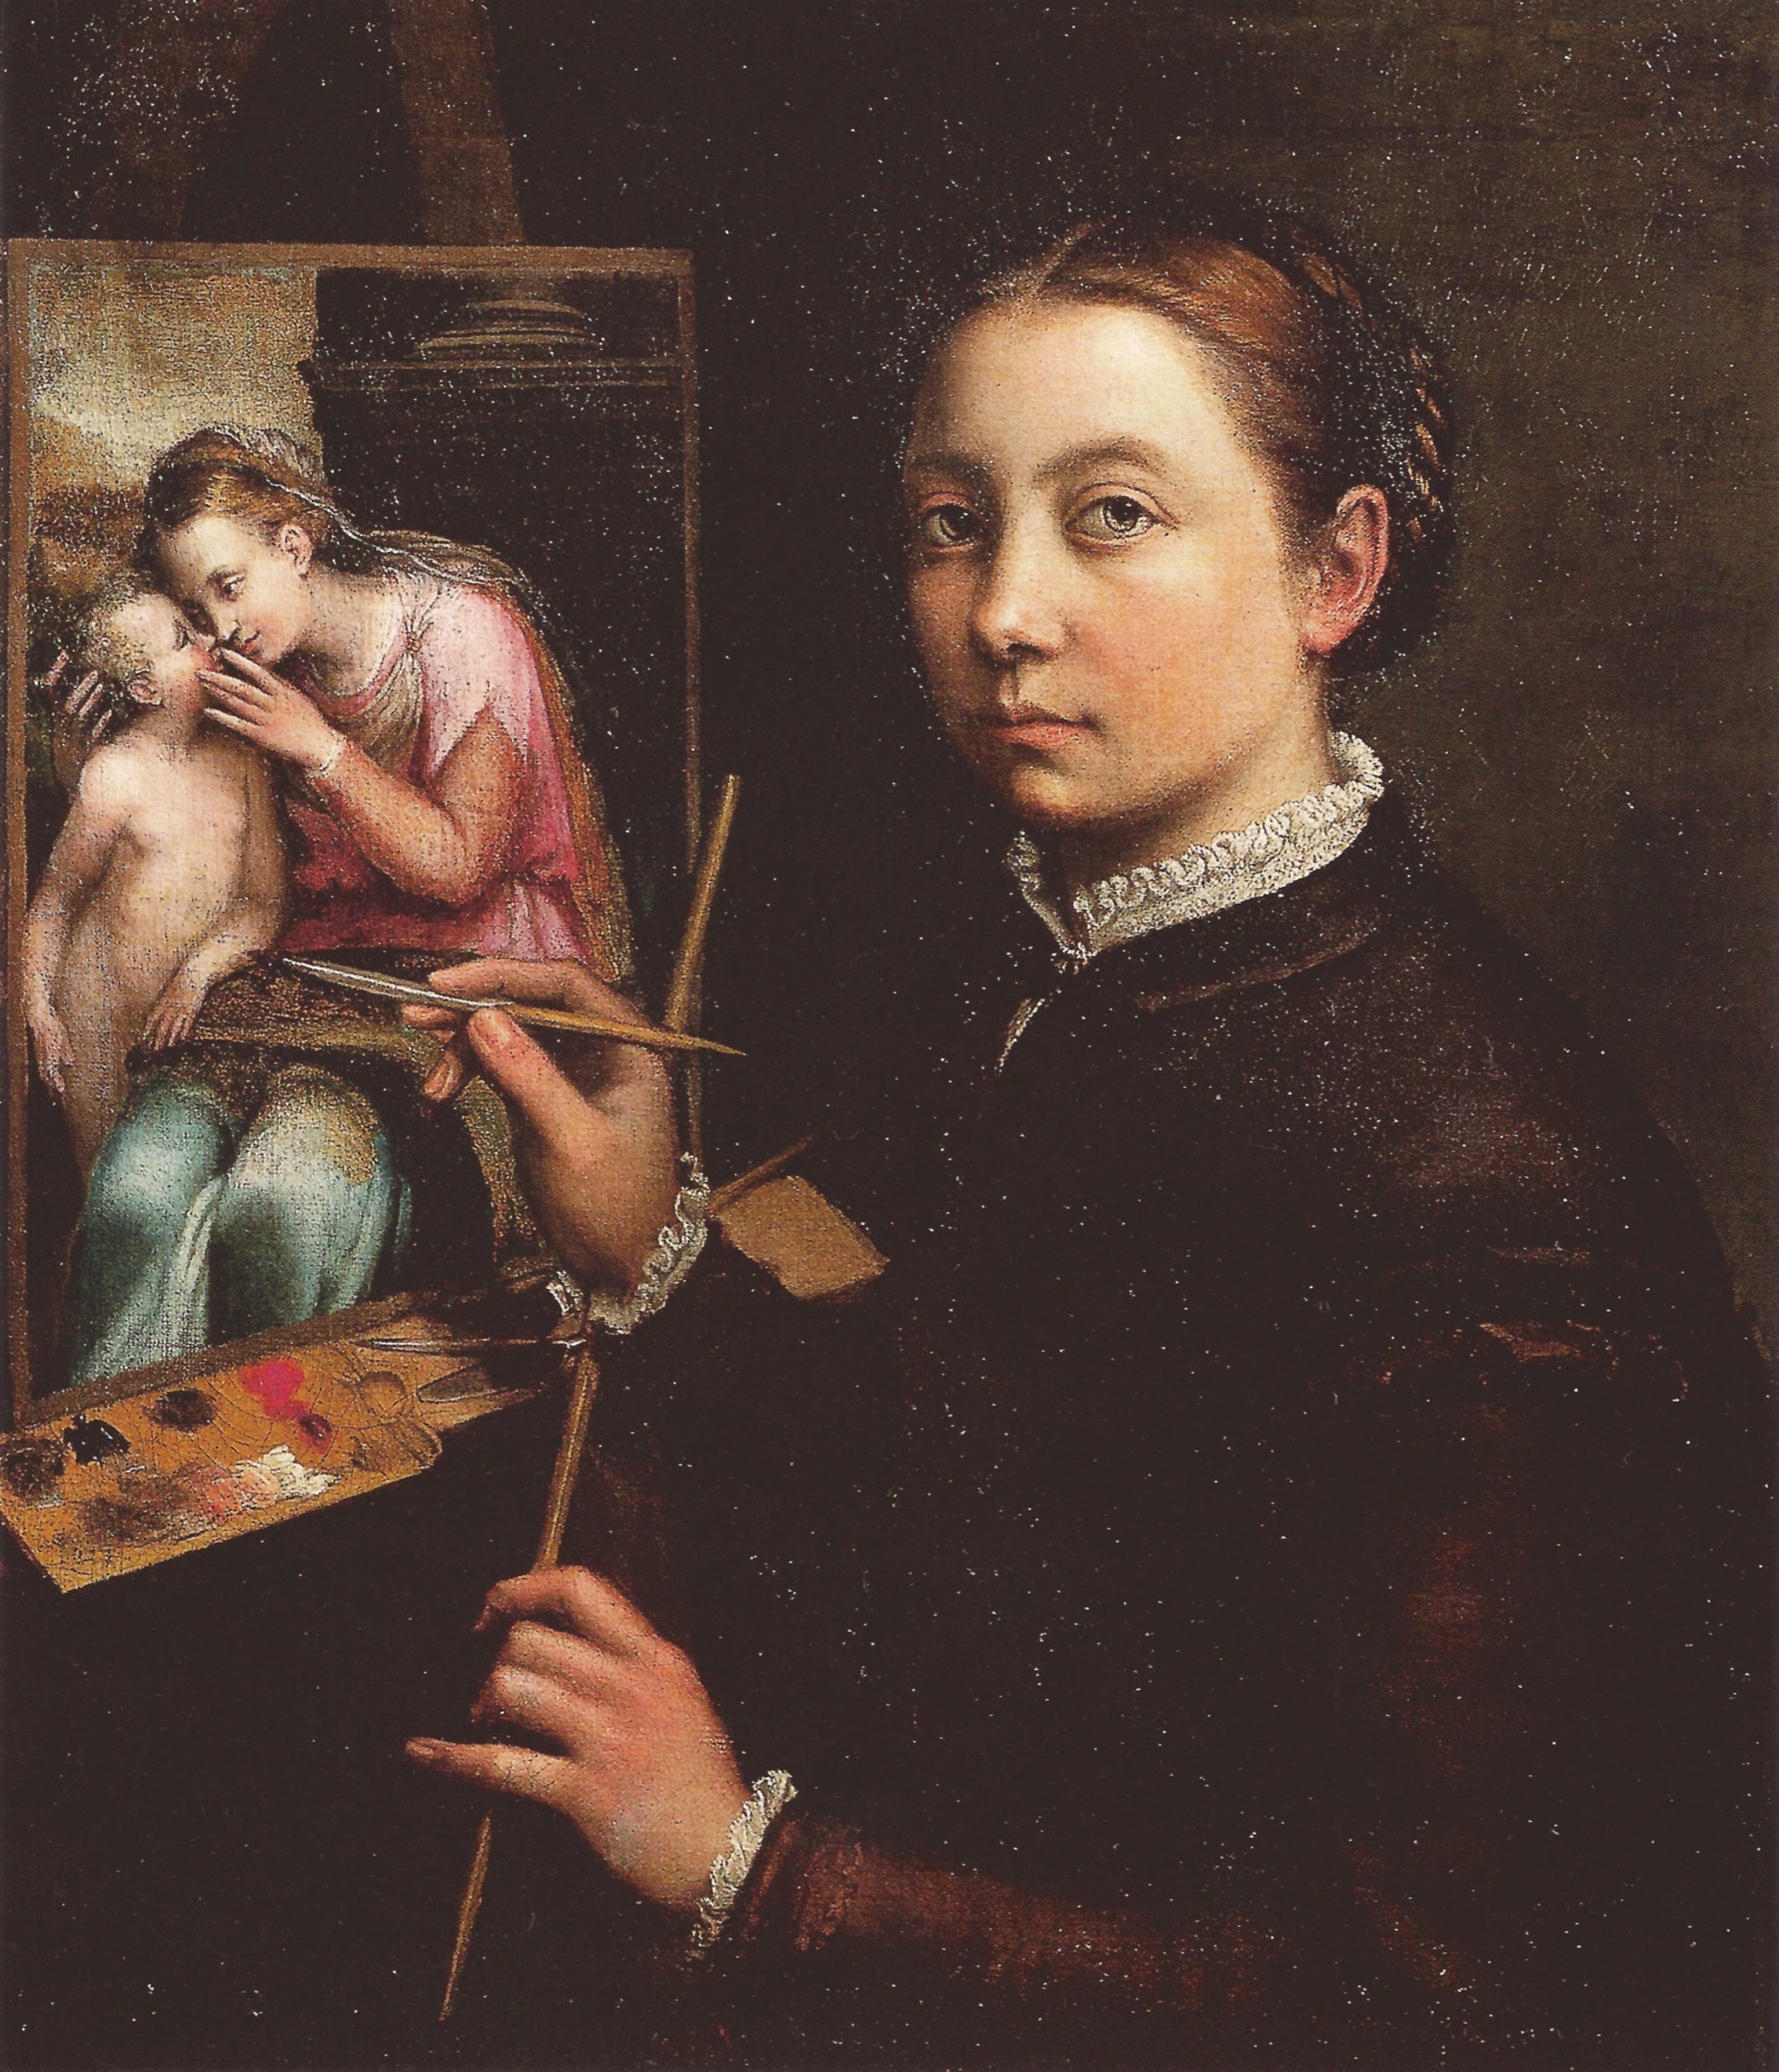 Auto-retrato ao cavalete by Sofonisba Anguissola - 1556 